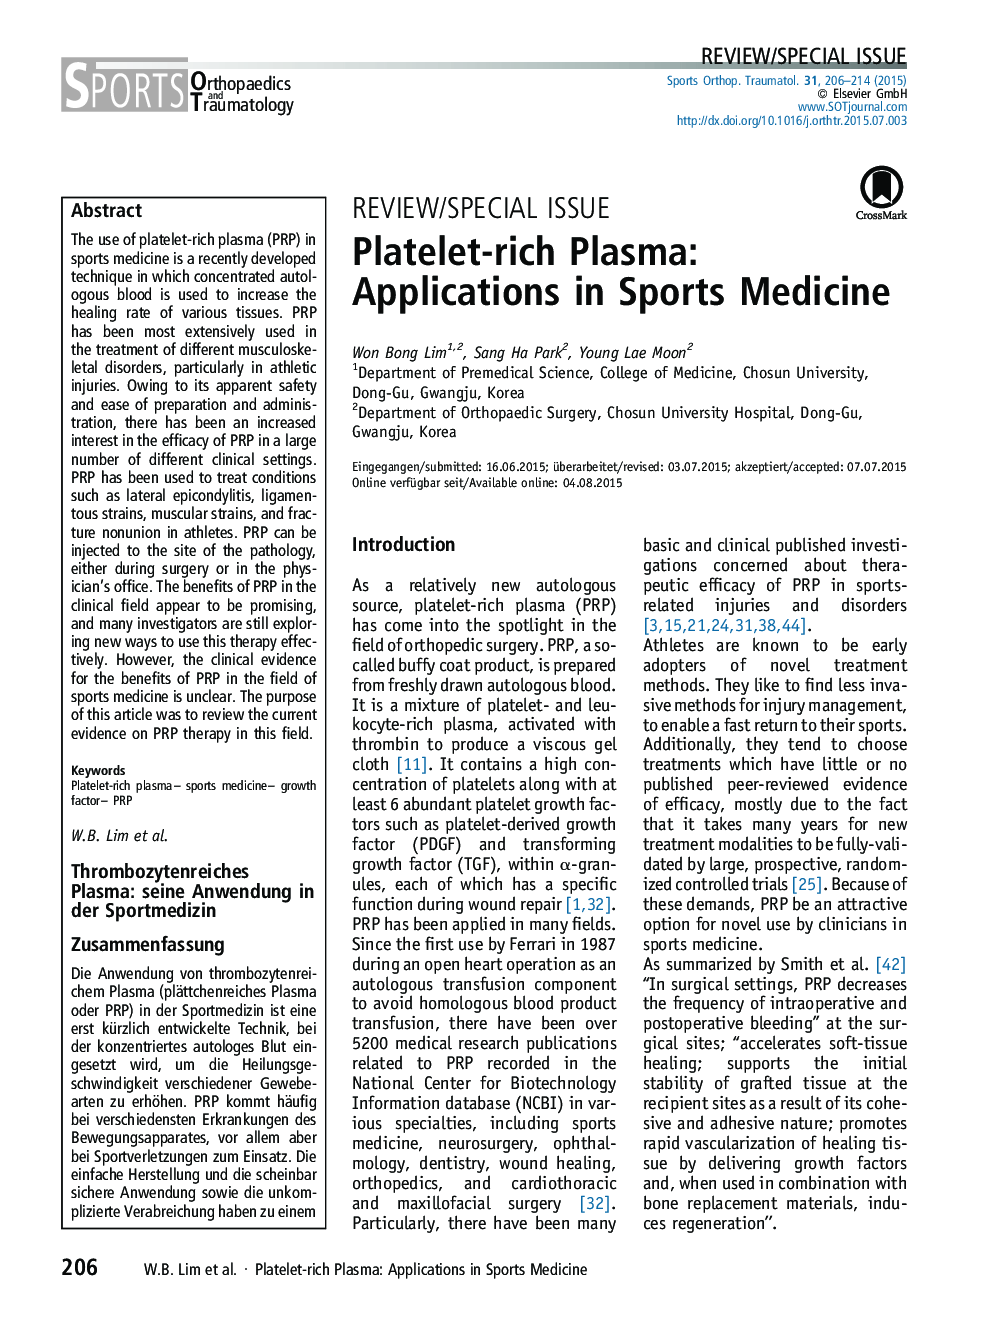 Platelet-rich Plasma: Applications in Sports Medicine